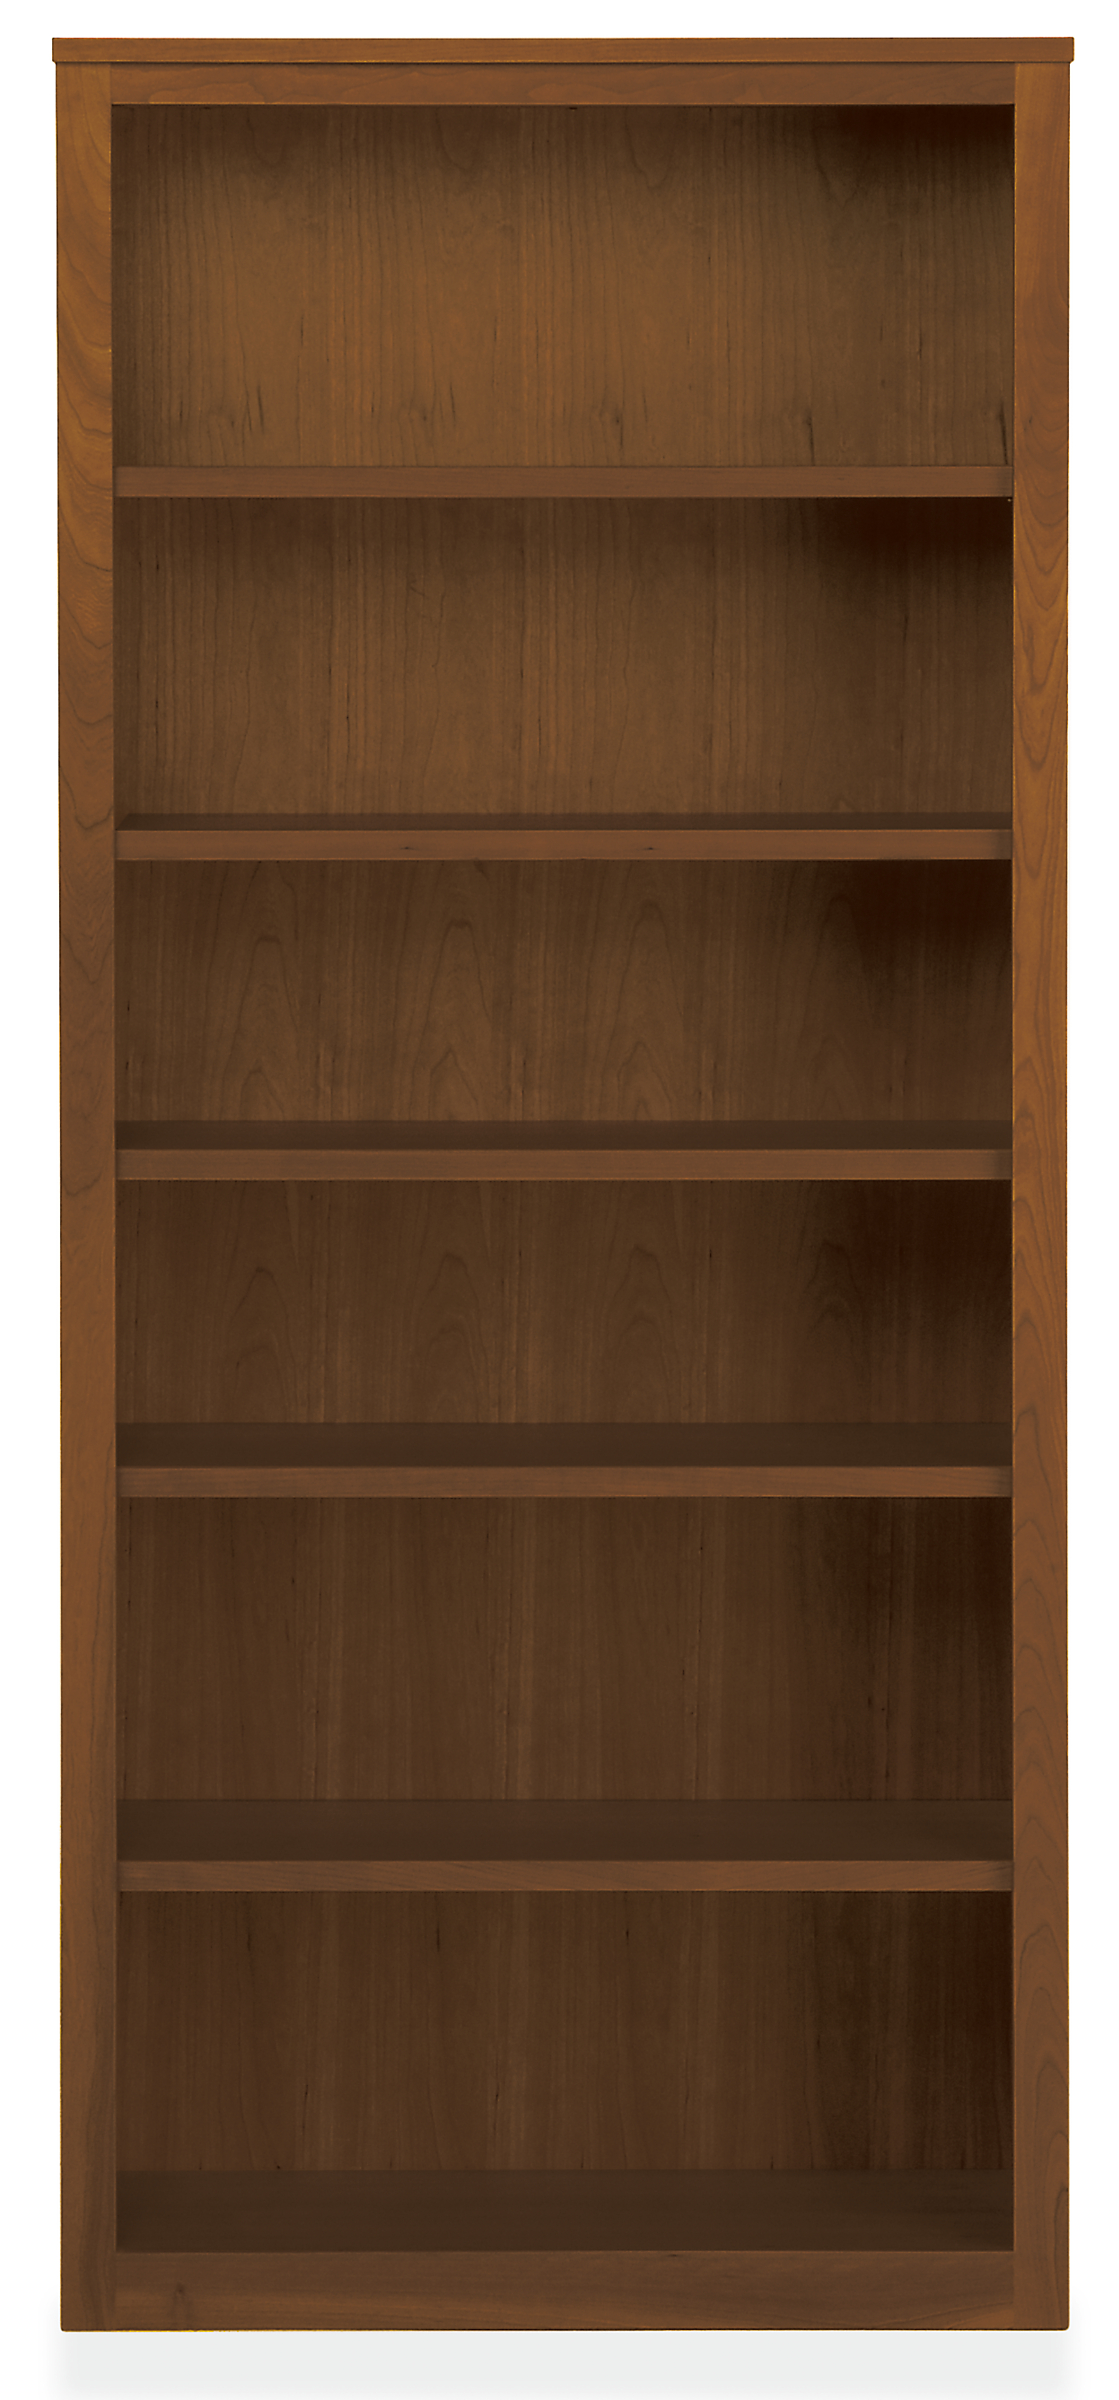 Woodwind 32w 12d 72h Bookcase